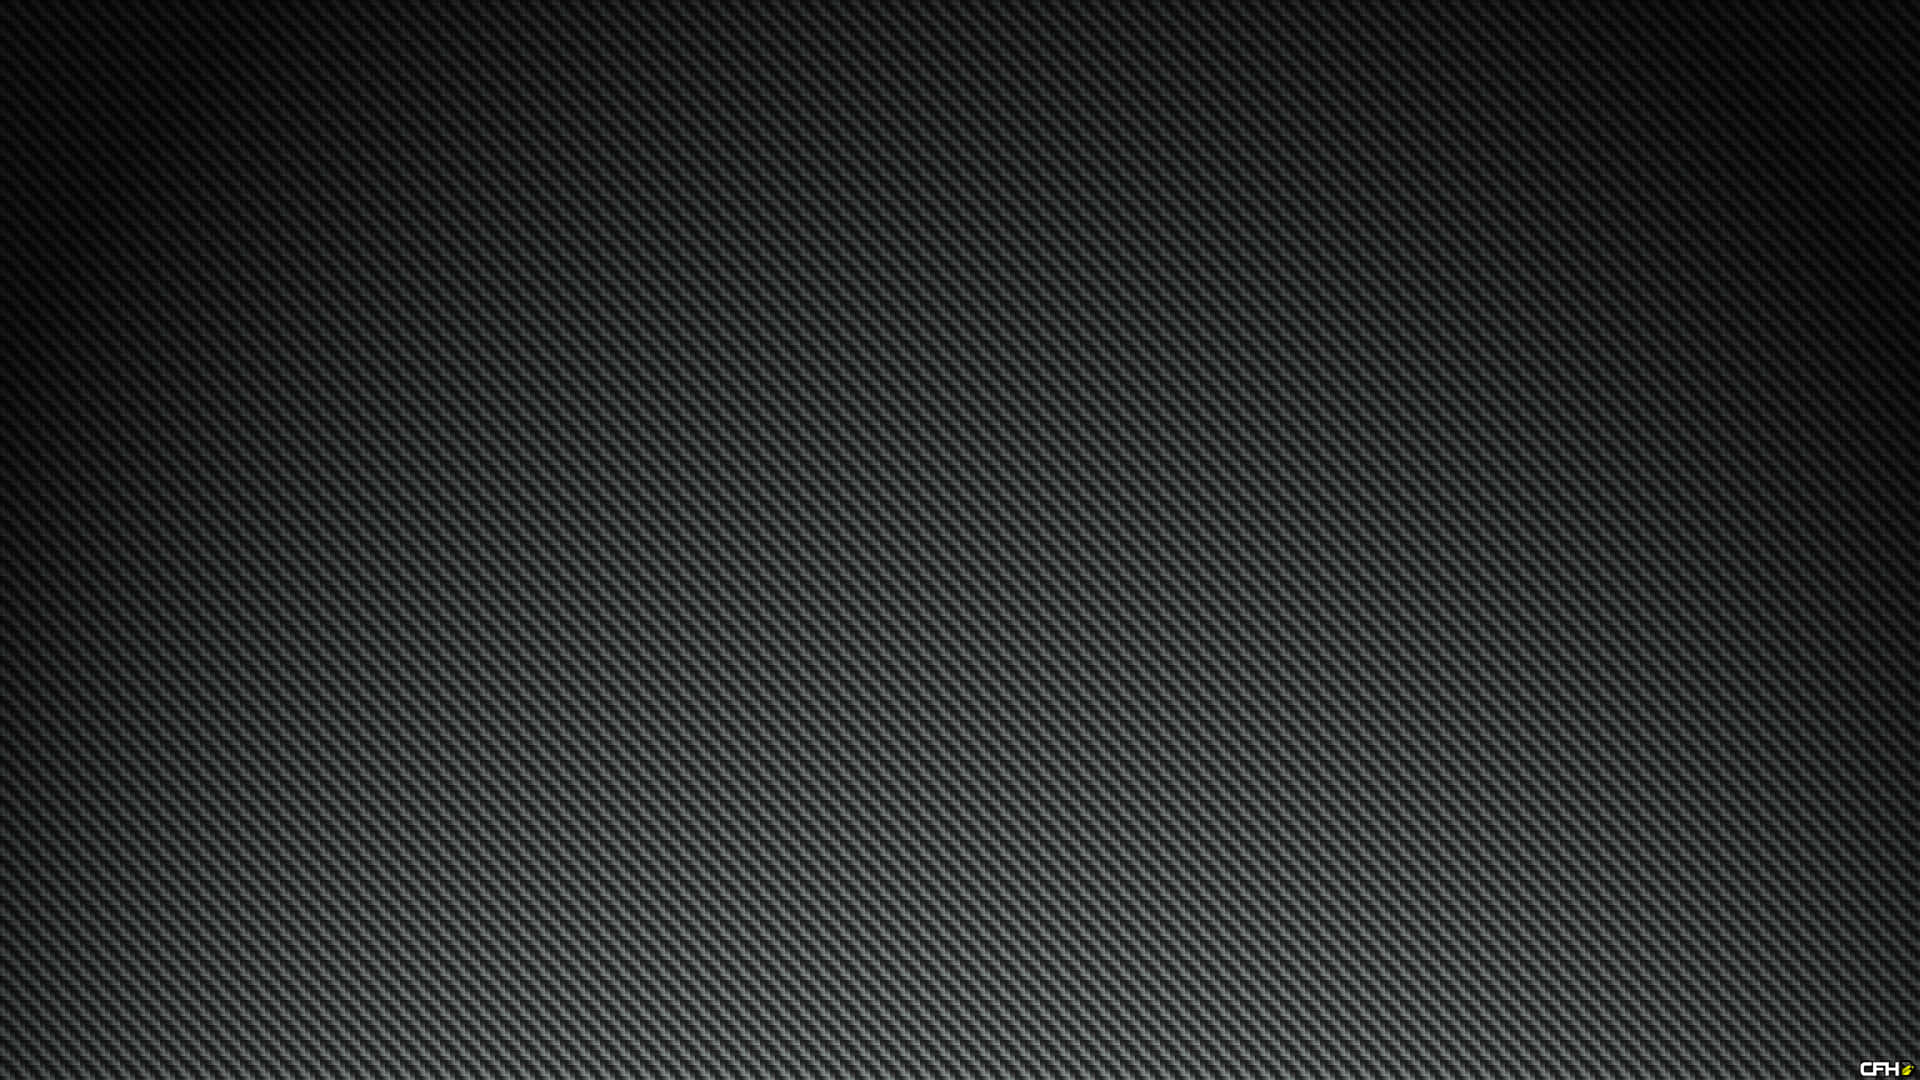 Uniquely Styled, Ultra-Lightweight Black Carbon Fiber Wallpaper